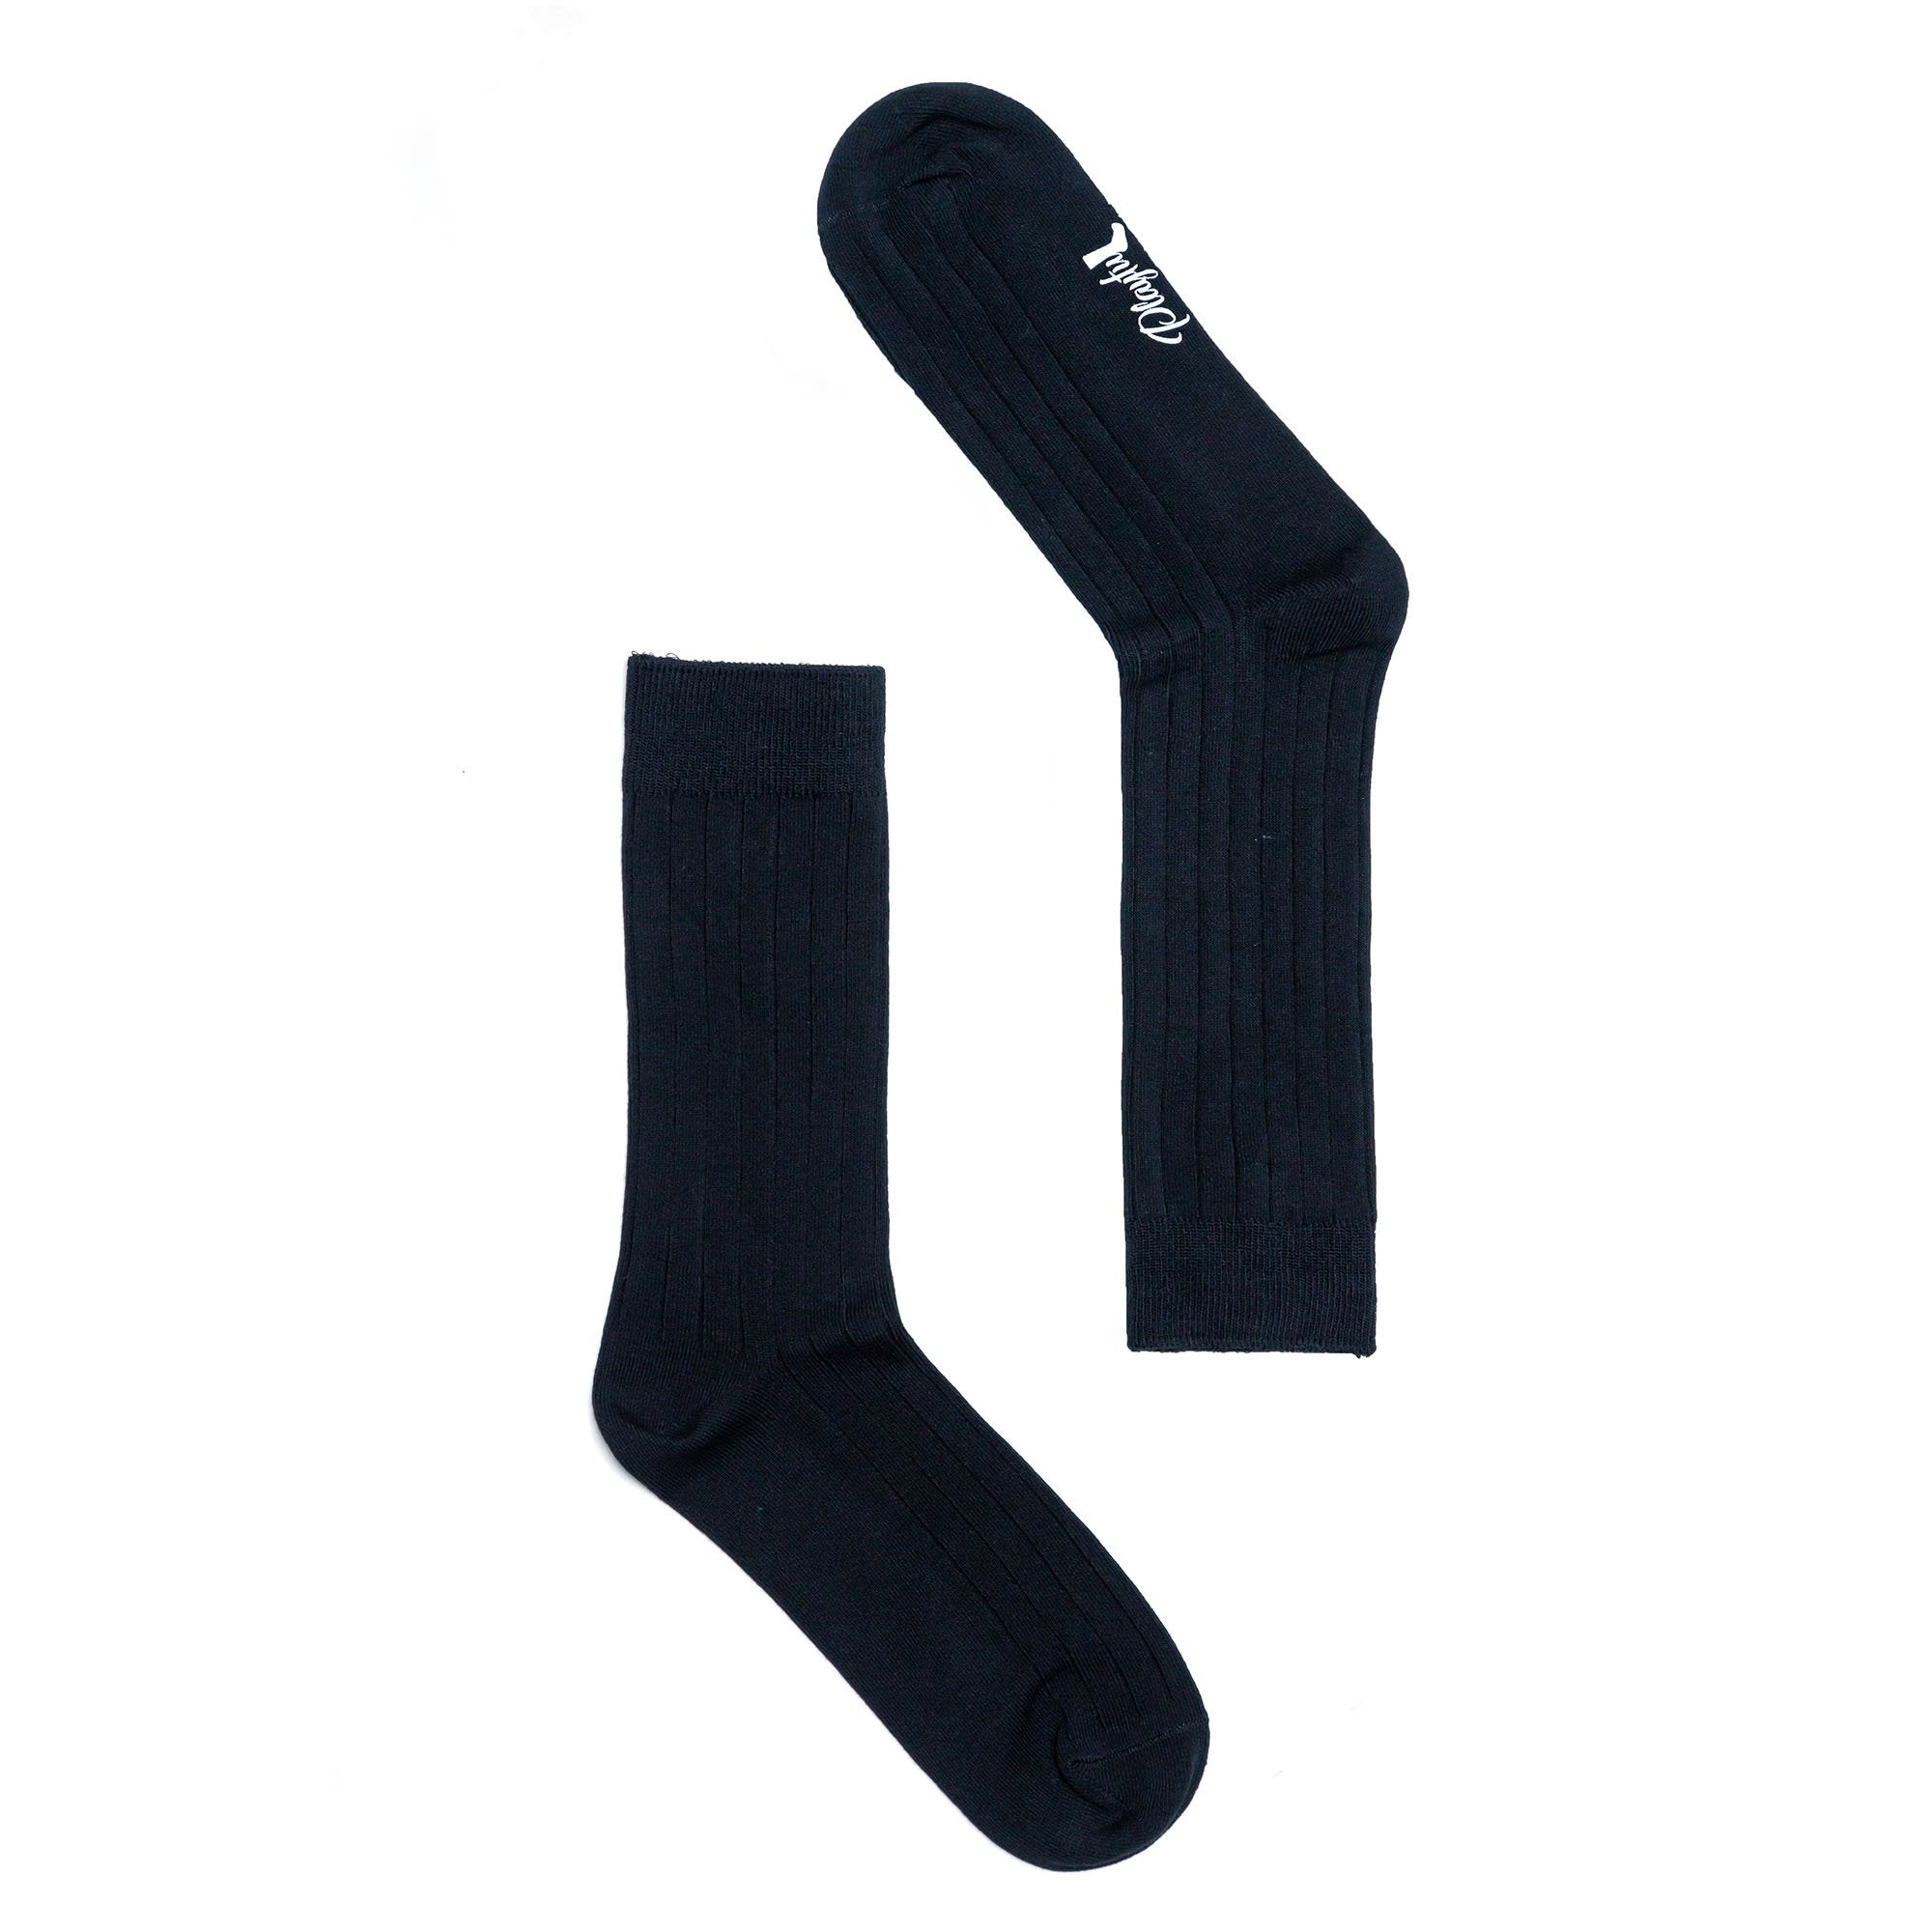 Playful Socks - Black